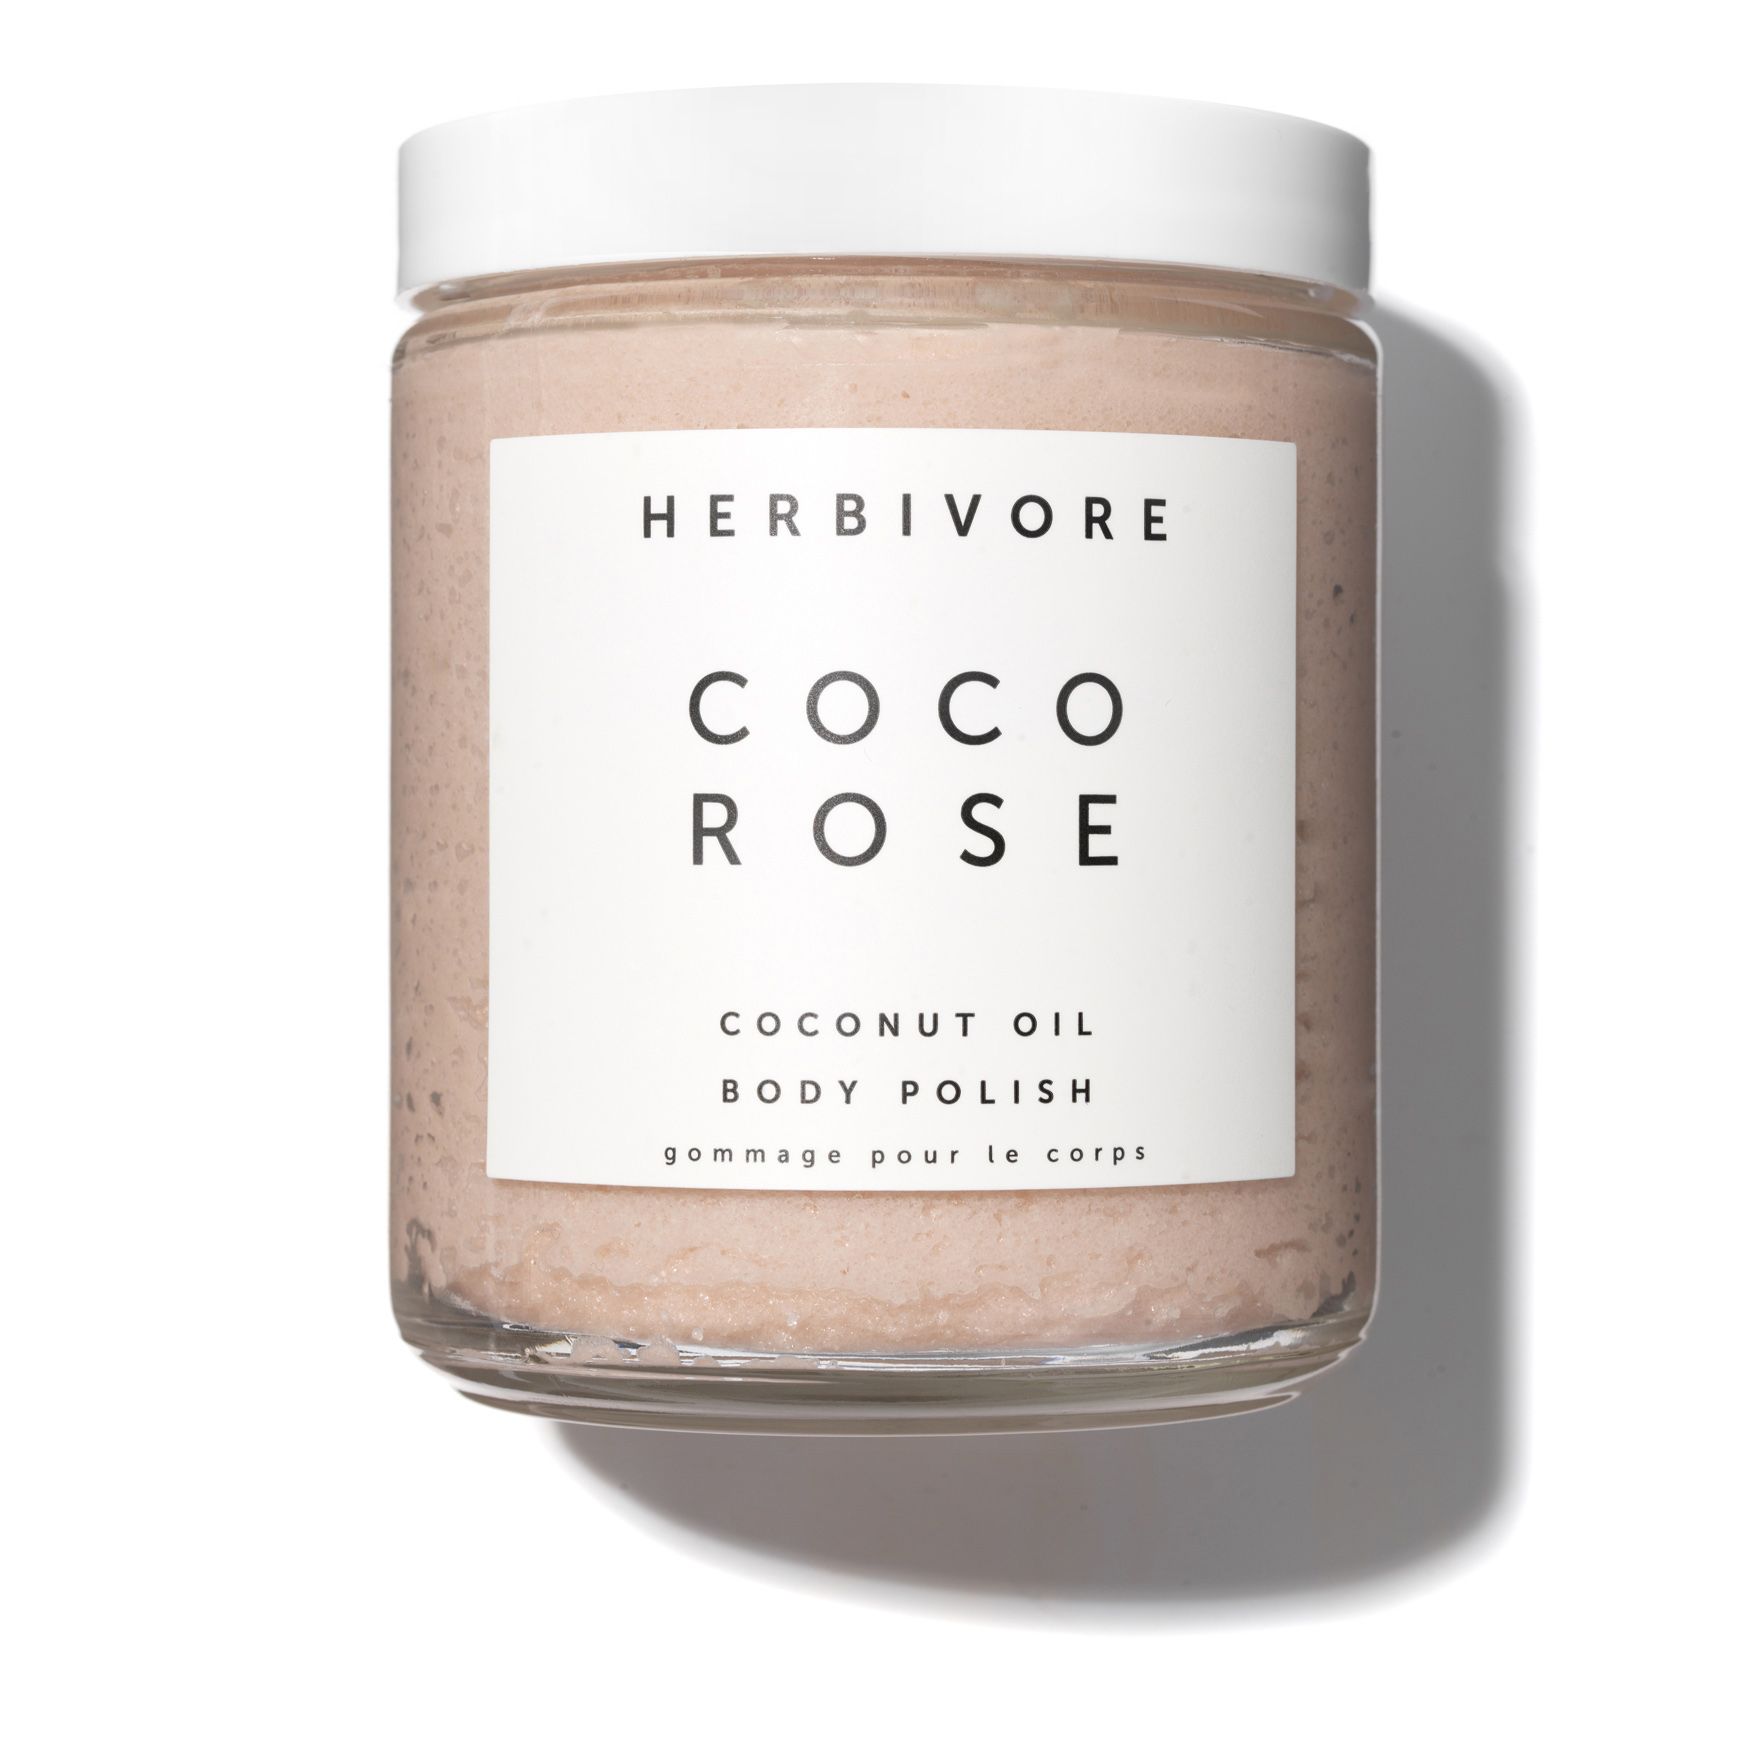 Herbivore Coco Rose Body Polish | Space NK (EU)